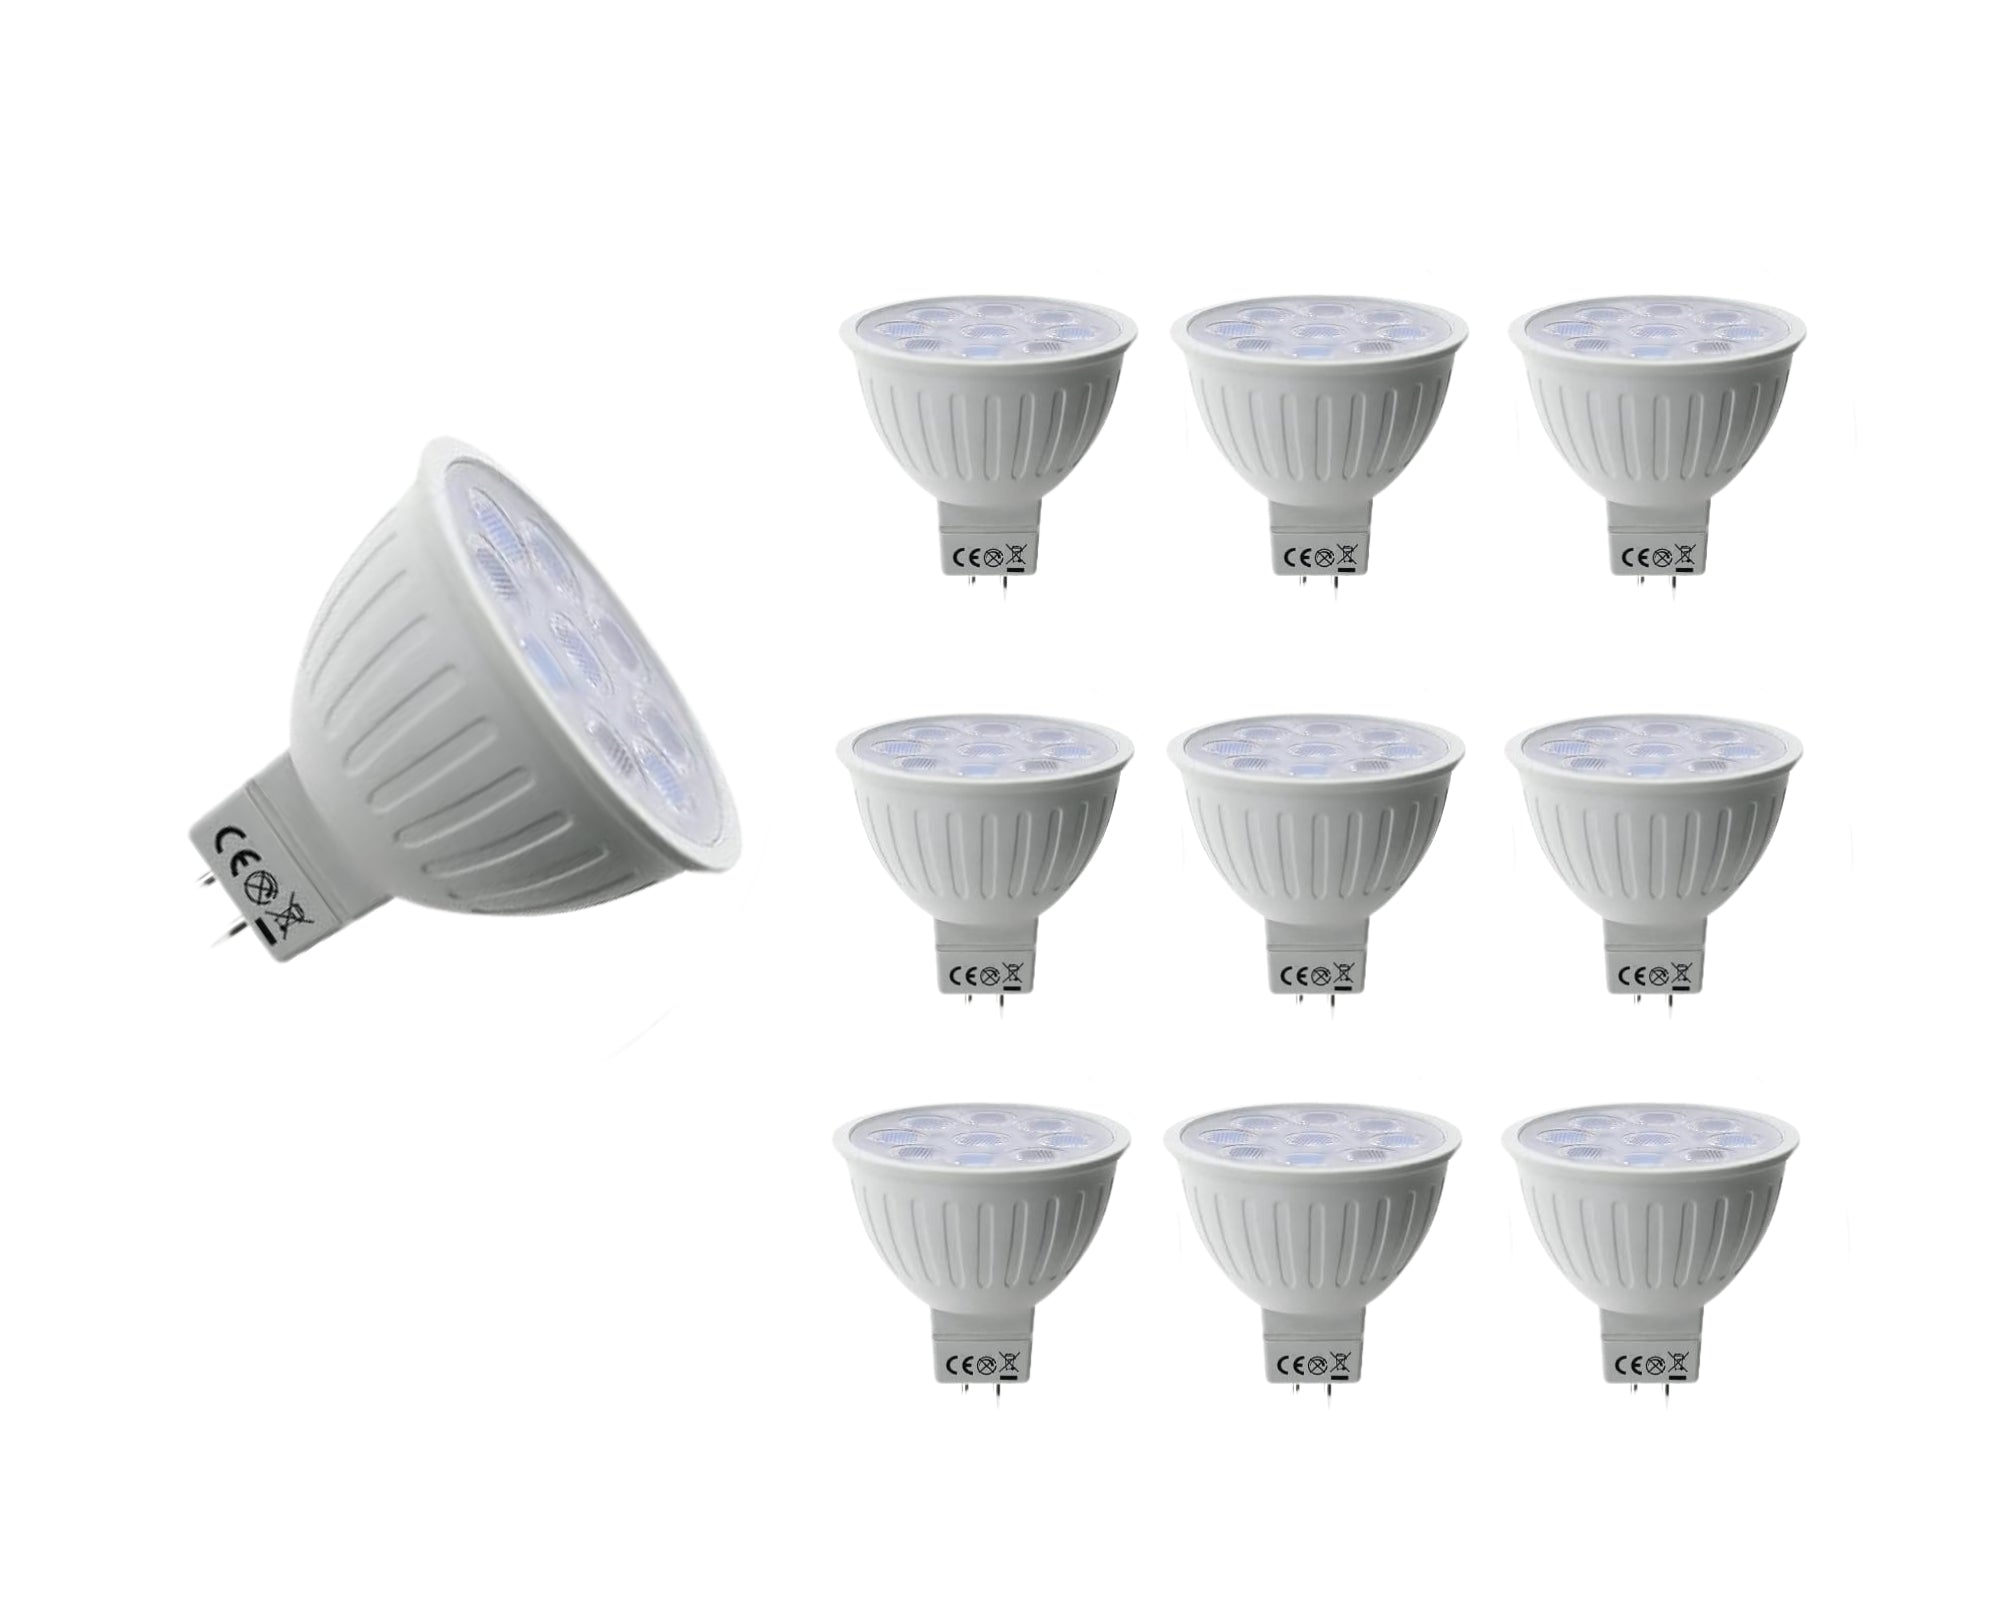 Lumina Lighting® MR16 4W LED Bulb | 4W Bi-Pin Landscape LED Light | 12V 3000K Warm White, 320 Lumens | (10-Pack)